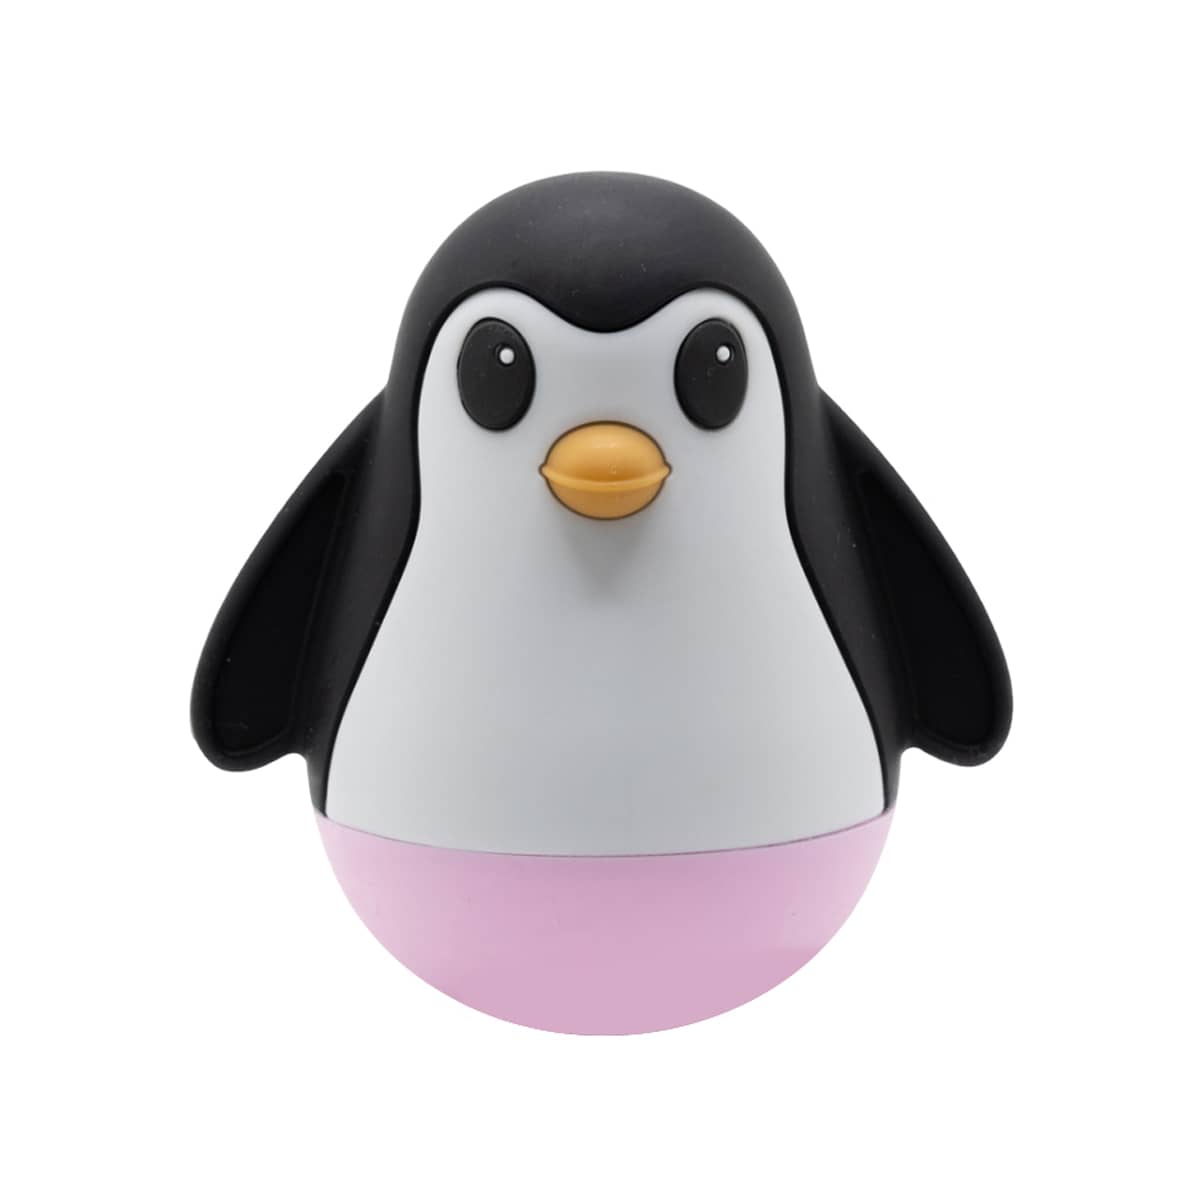 Jellystone Designs Penguin Wobble - Bubblegum